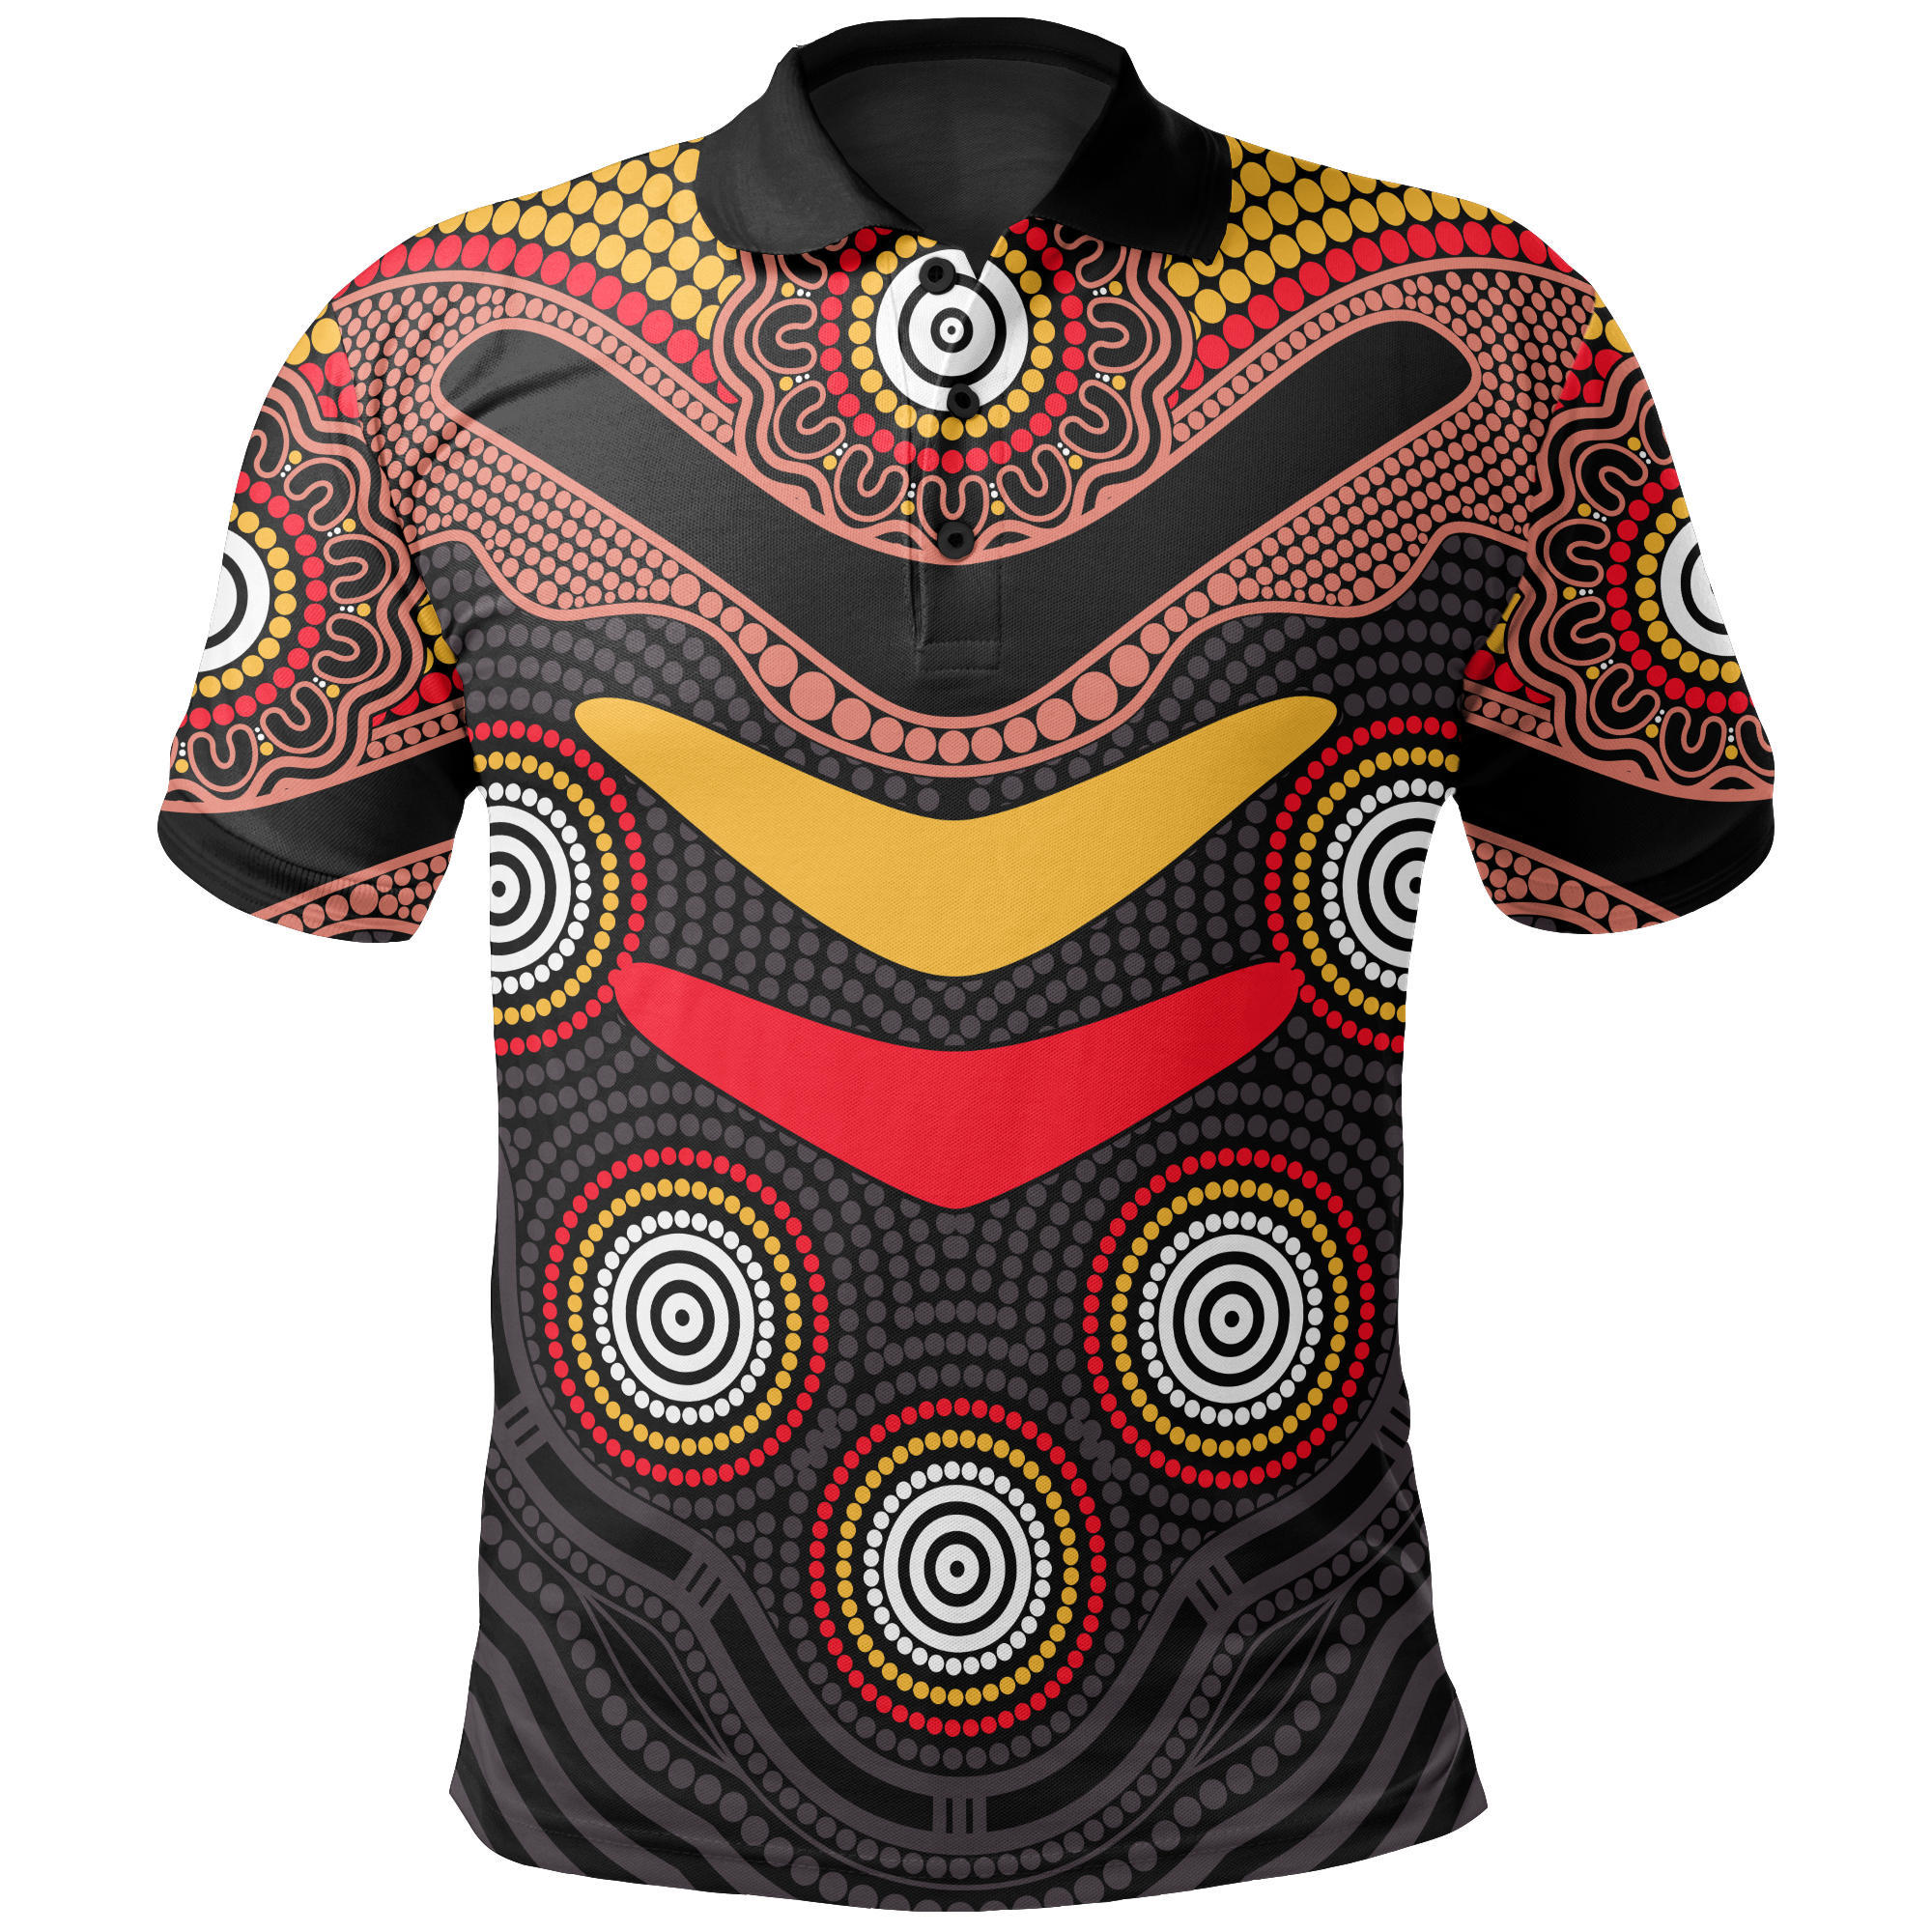 vibe-hoodie-polo-shirt-aboriginal-patterns-shirt-boomerang-style-unisex